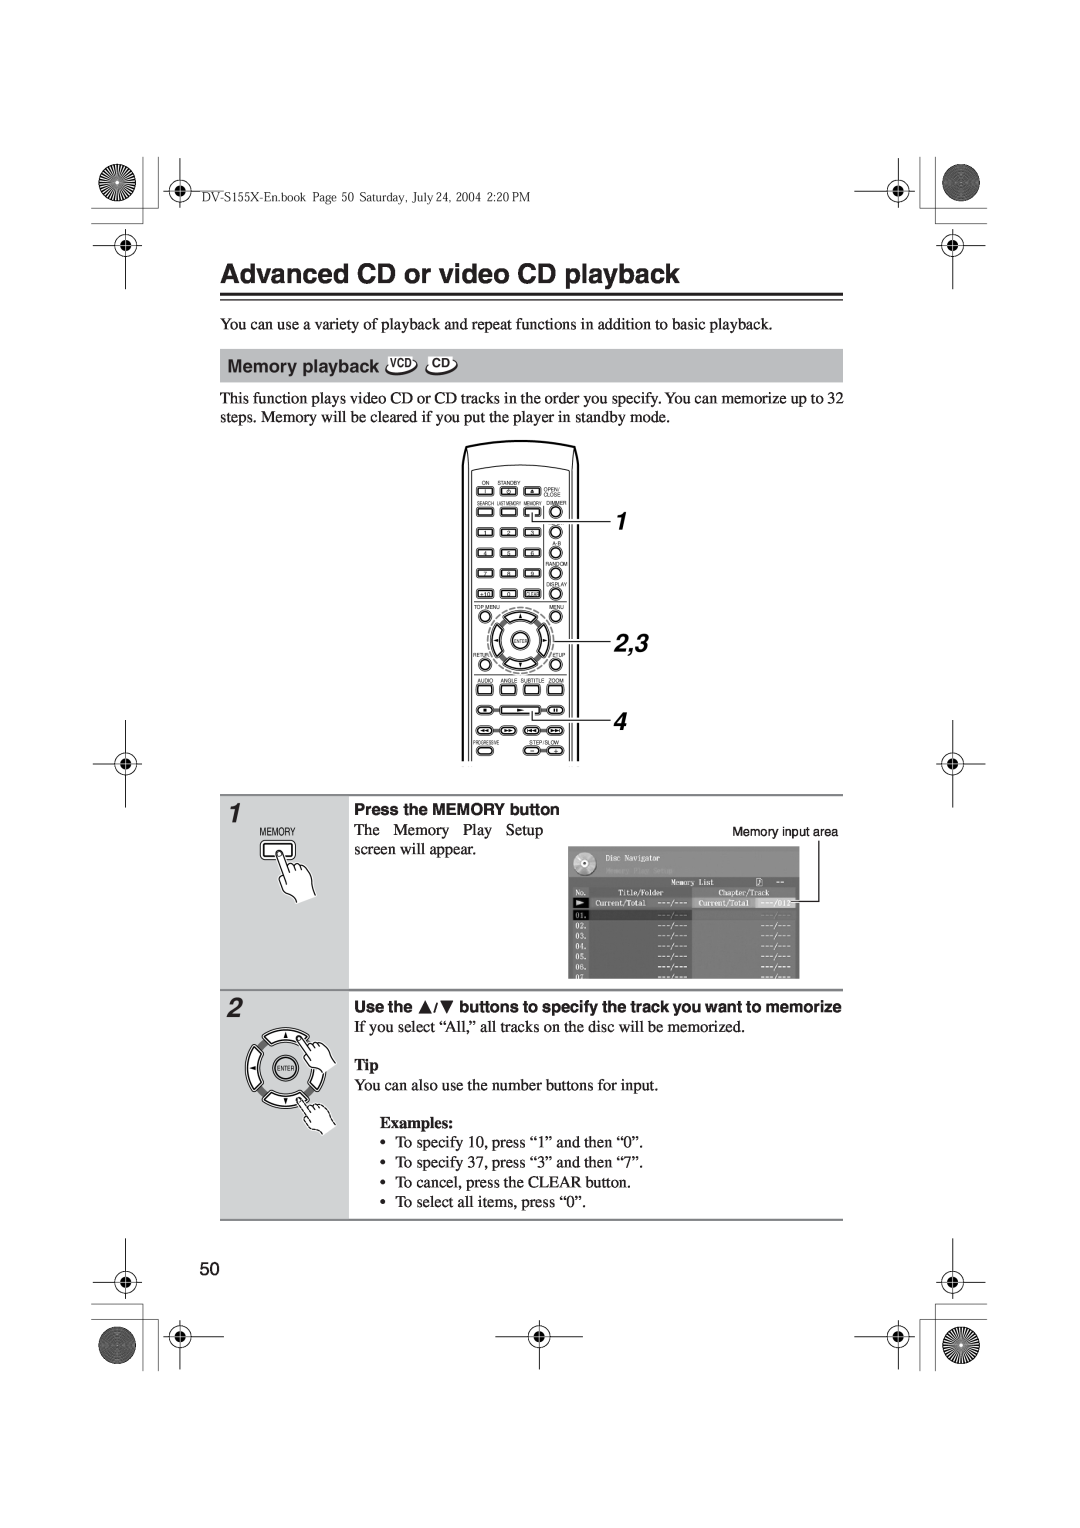 Onkyo ST-V10X, PR-155X Advanced CD or video CD playback, Memory playback VCDCD, 1 2,3, Press the MEMORY button, Examples 